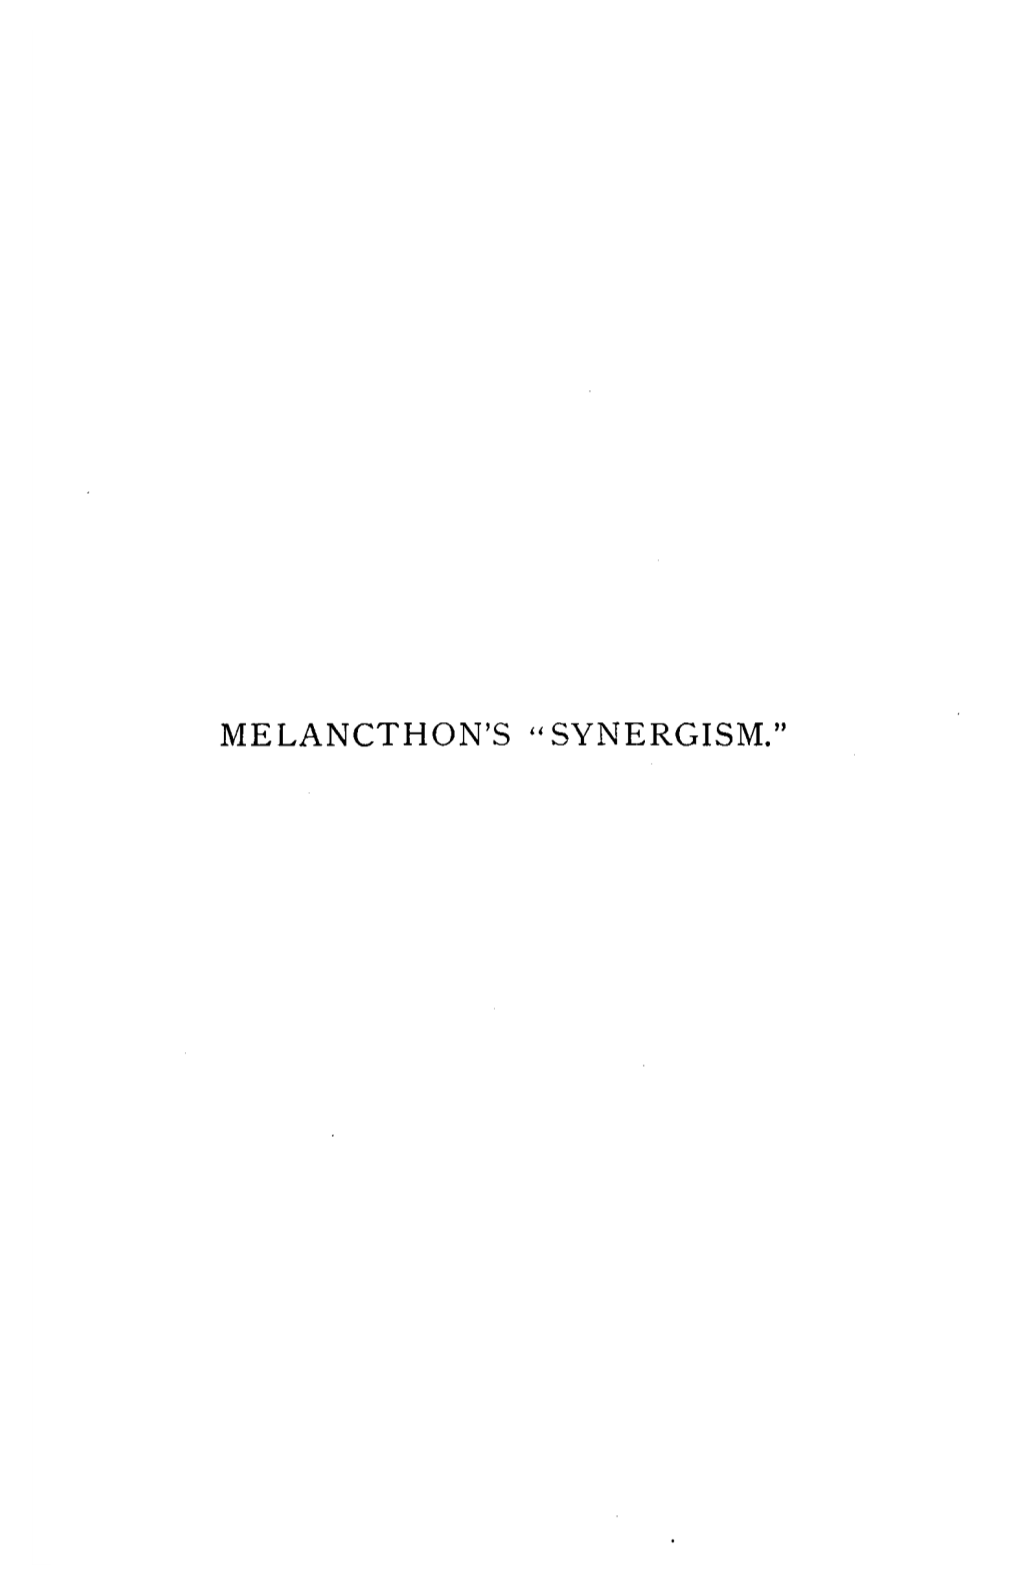 Melancthon's “Synergism.”